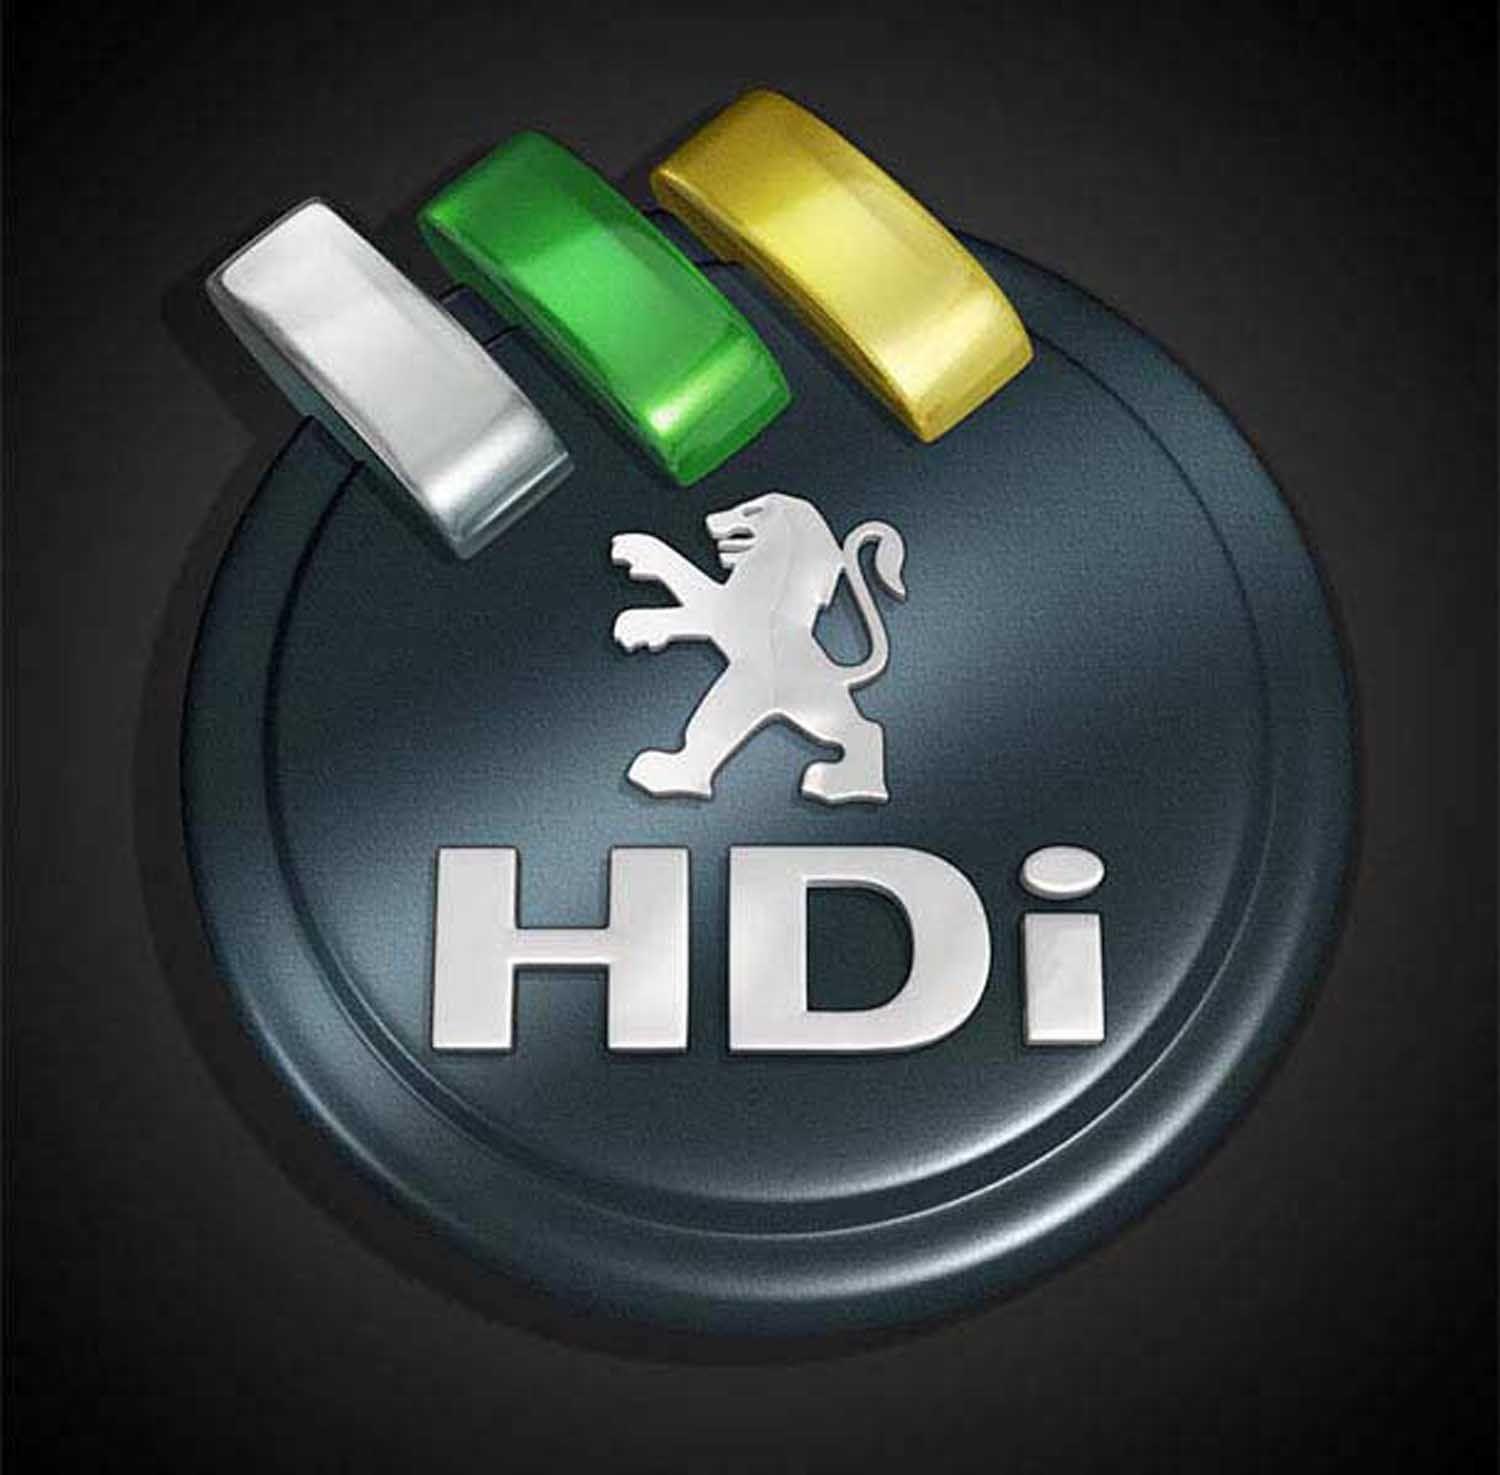 HDI Logo - Peugeot HDi | 3D Logo Visualizations | Bülent Gerçek | Bulent Gercek